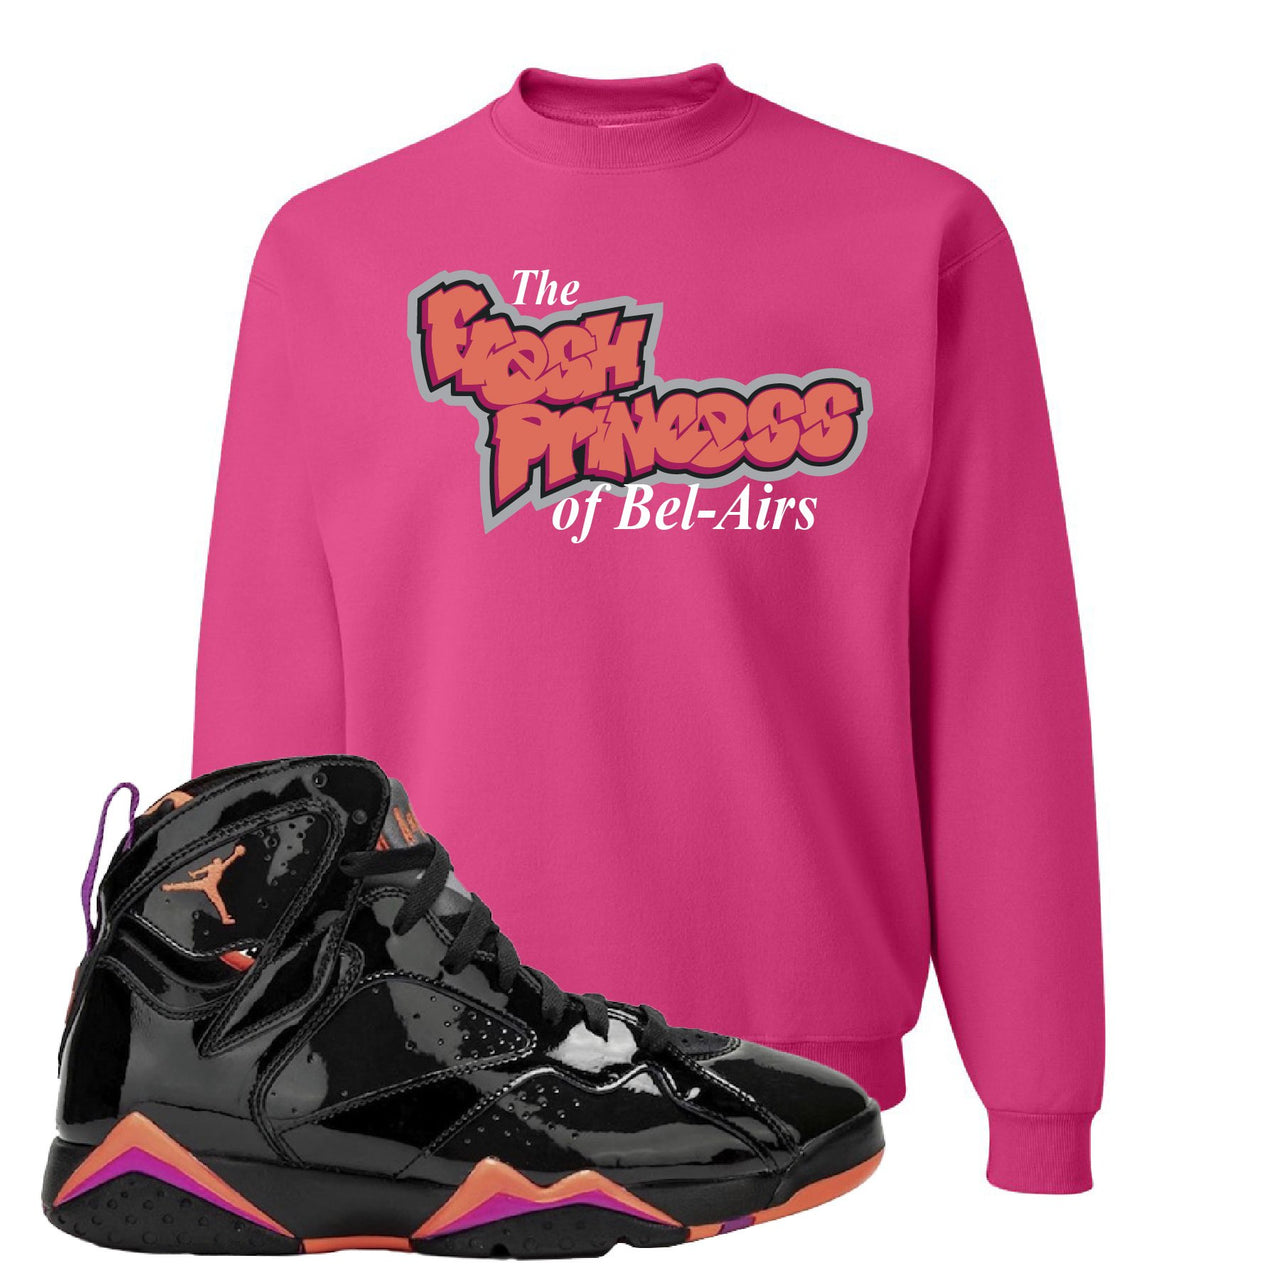 Jordan 7 WMNS Black Patent Leather The Fresh Princess of Bel Air Cyber Pink Sneaker Hook Up Crewneck Sweatshirt